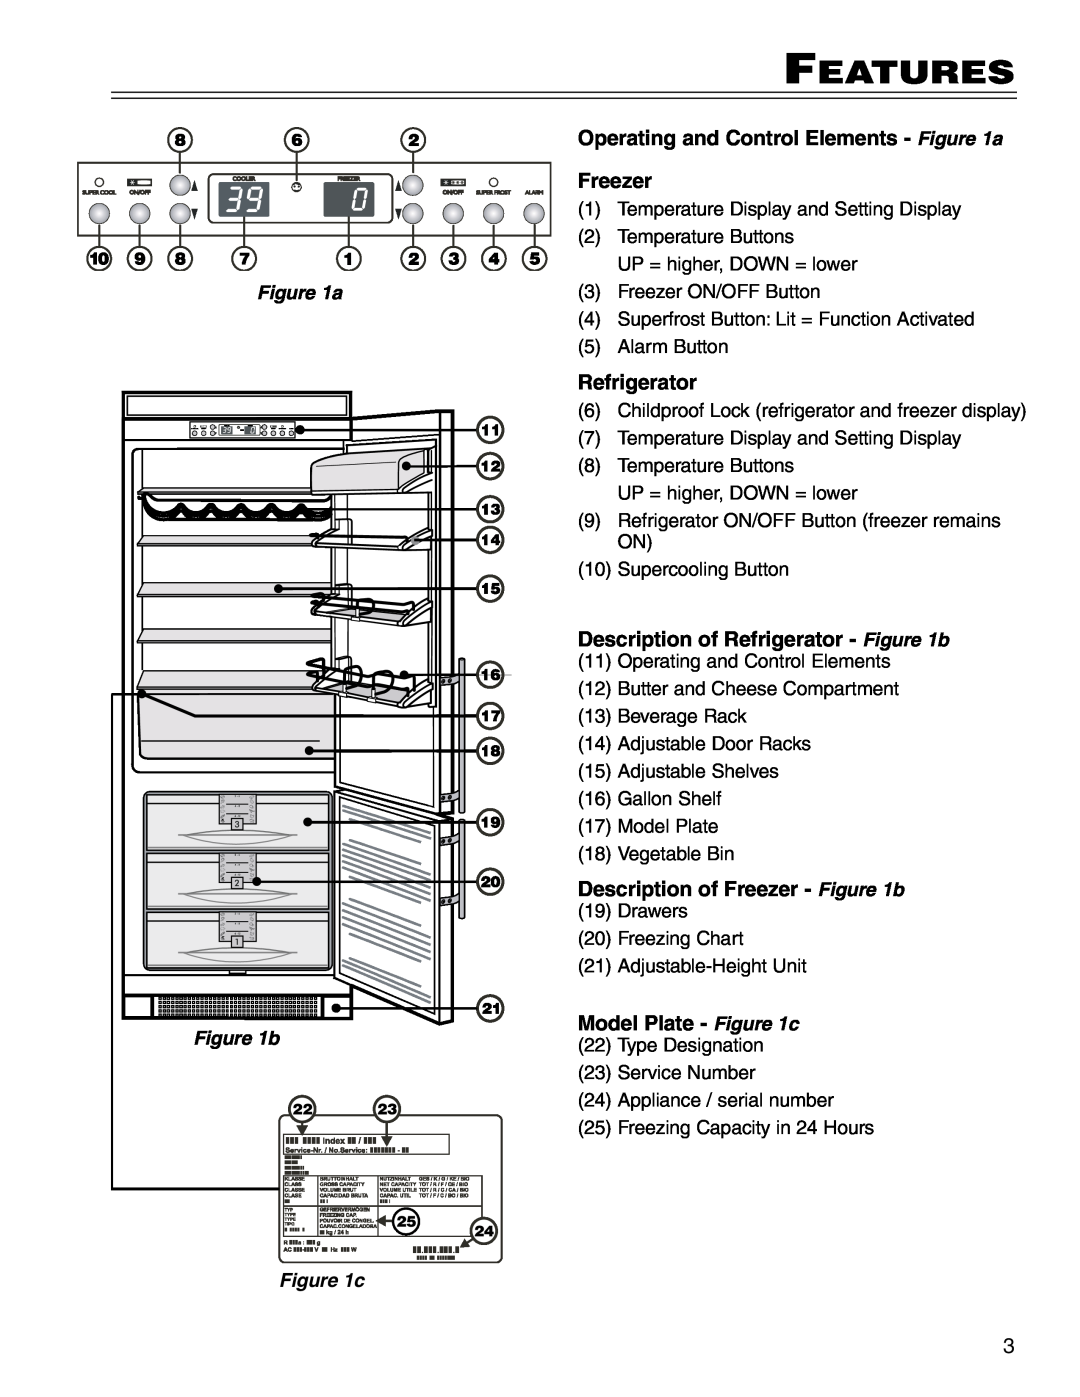 Liebherr CS 16 Features, Operating and Control Elements - a Freezer, Description of Refrigerator - b, Model Plate - c 